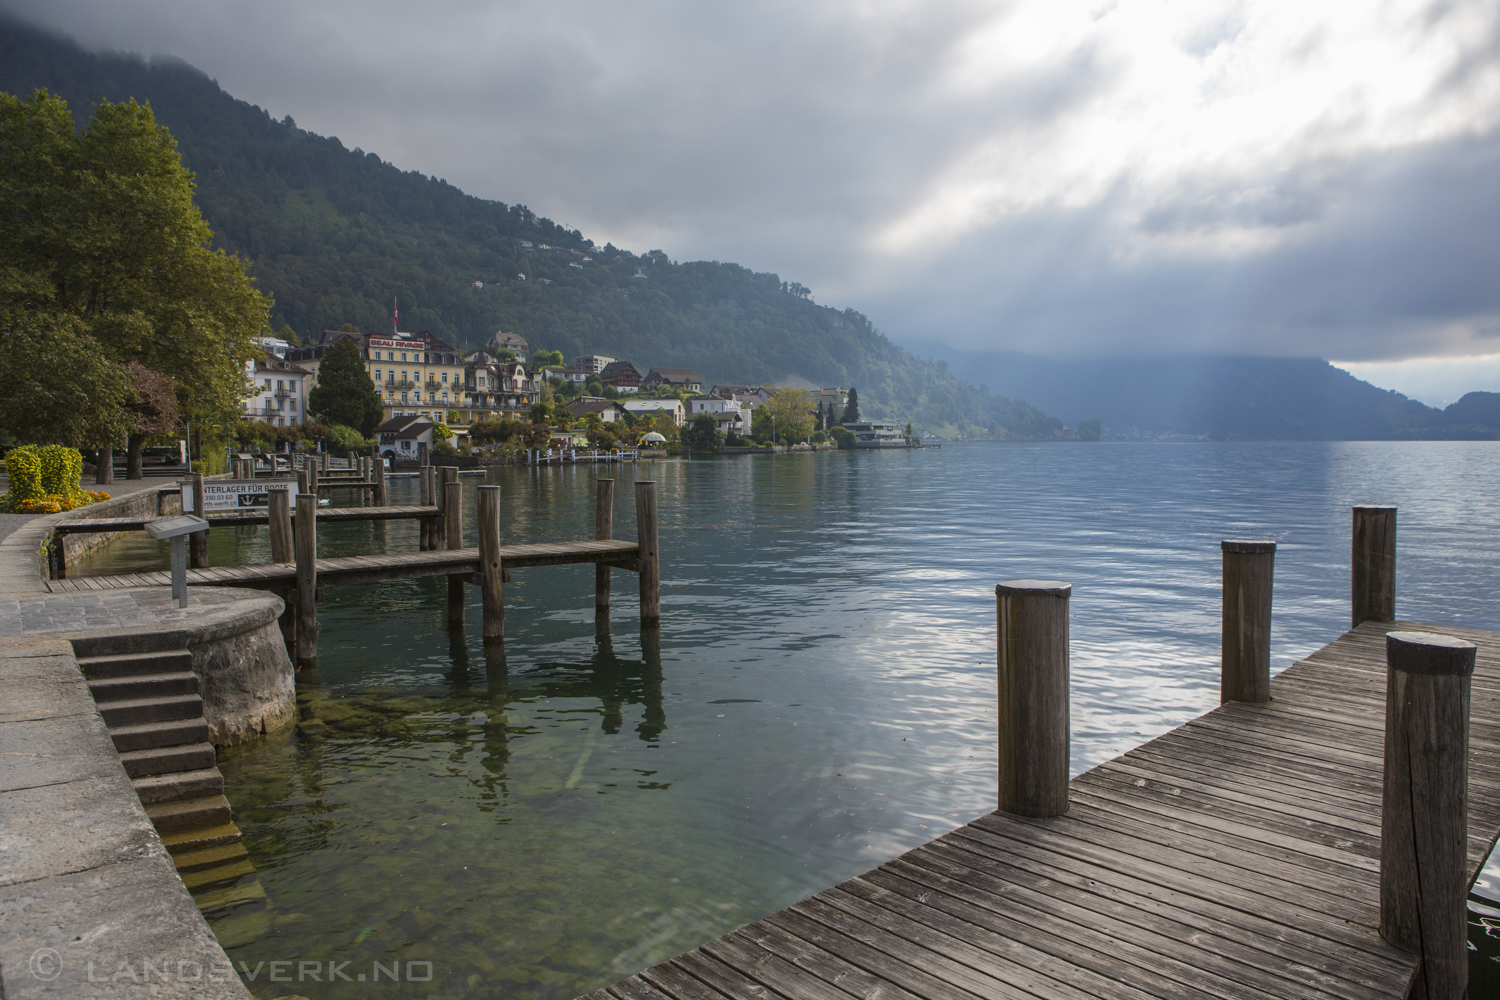 Weggis, Switzerland. 

(Canon EOS 5D Mark III / Canon EF 24-70mm f/2.8 L USM)